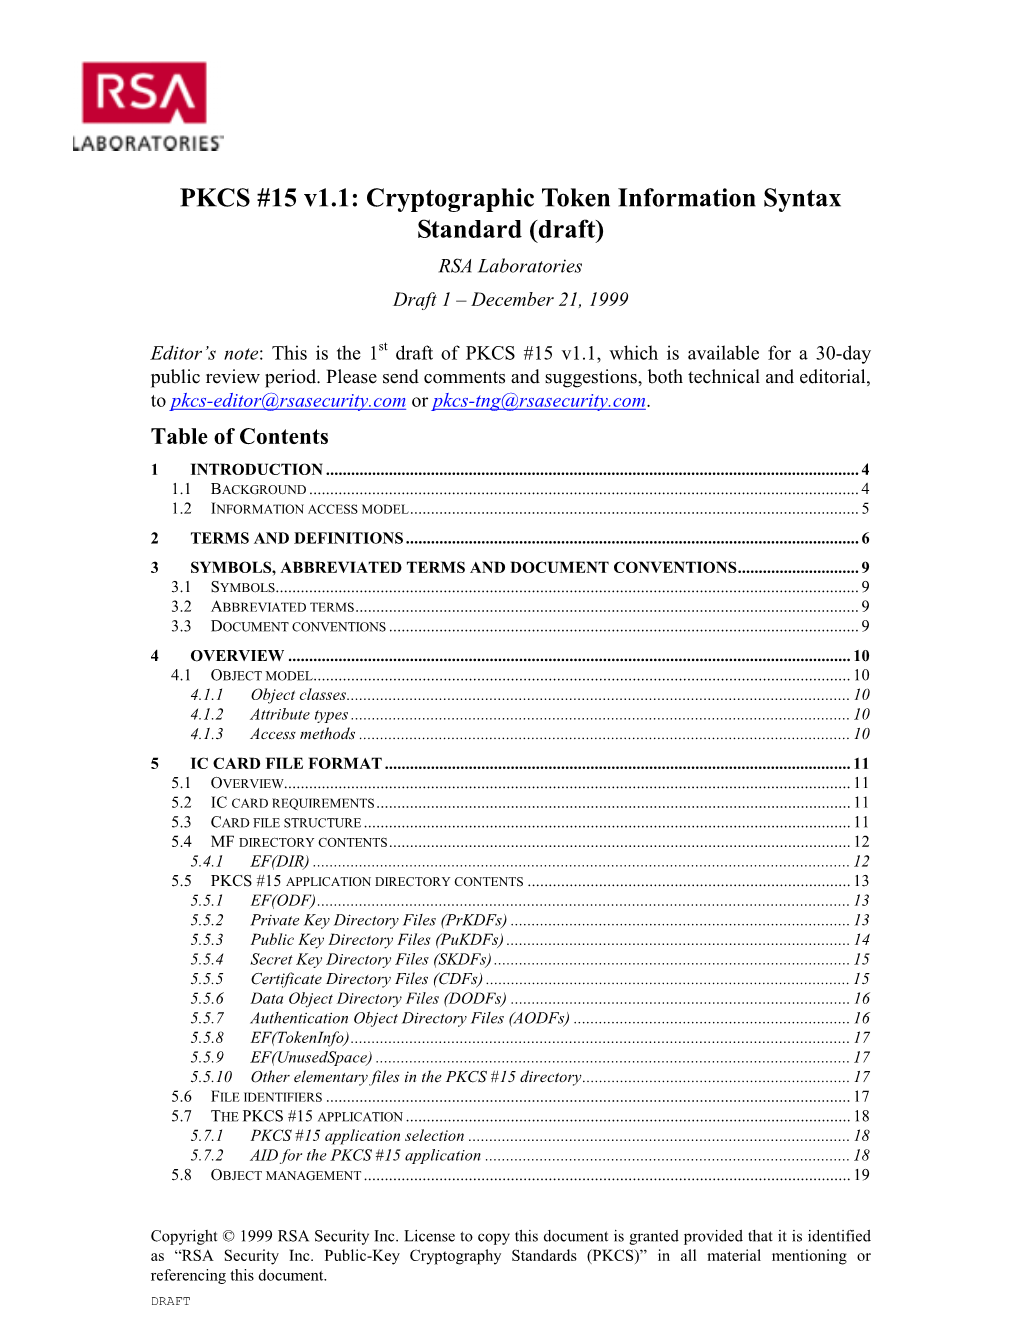 PKCS #15 V1.1: Cryptographic Token Information Syntax Standard (Draft) RSA Laboratories Draft 1 – December 21, 1999